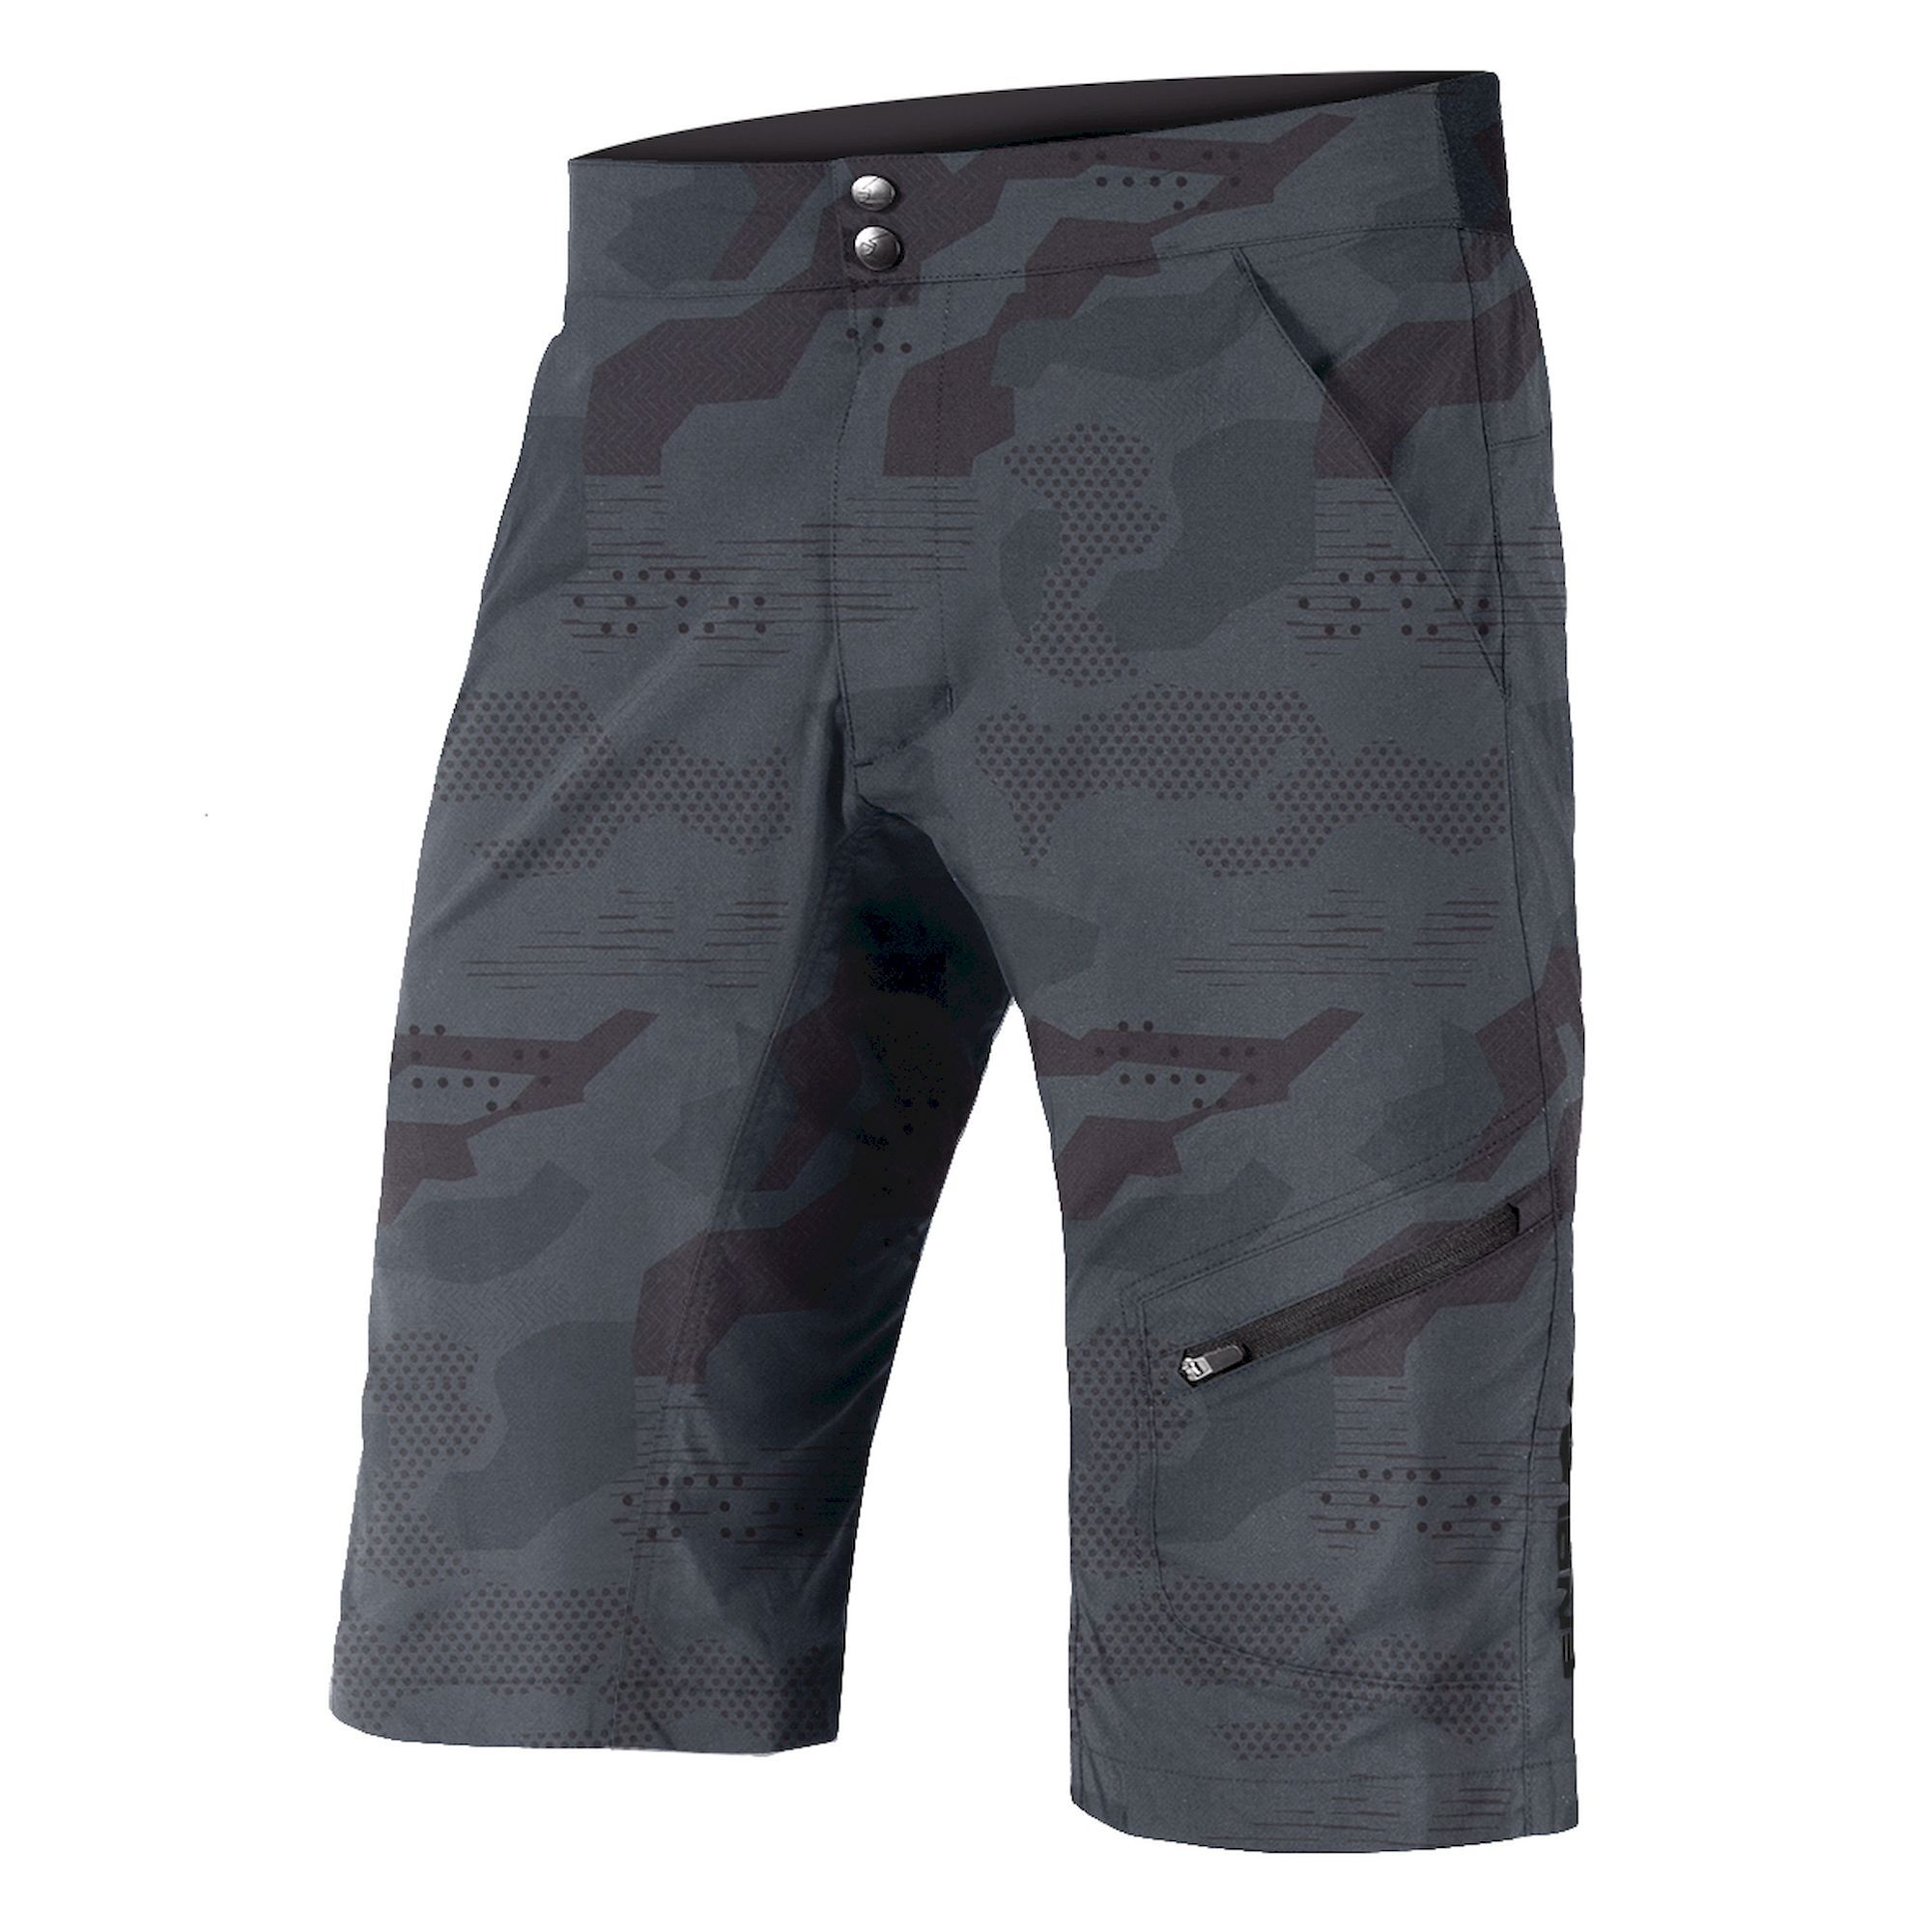 Endura Hummvee Lite Short with Liner - MTB shorts - Men's